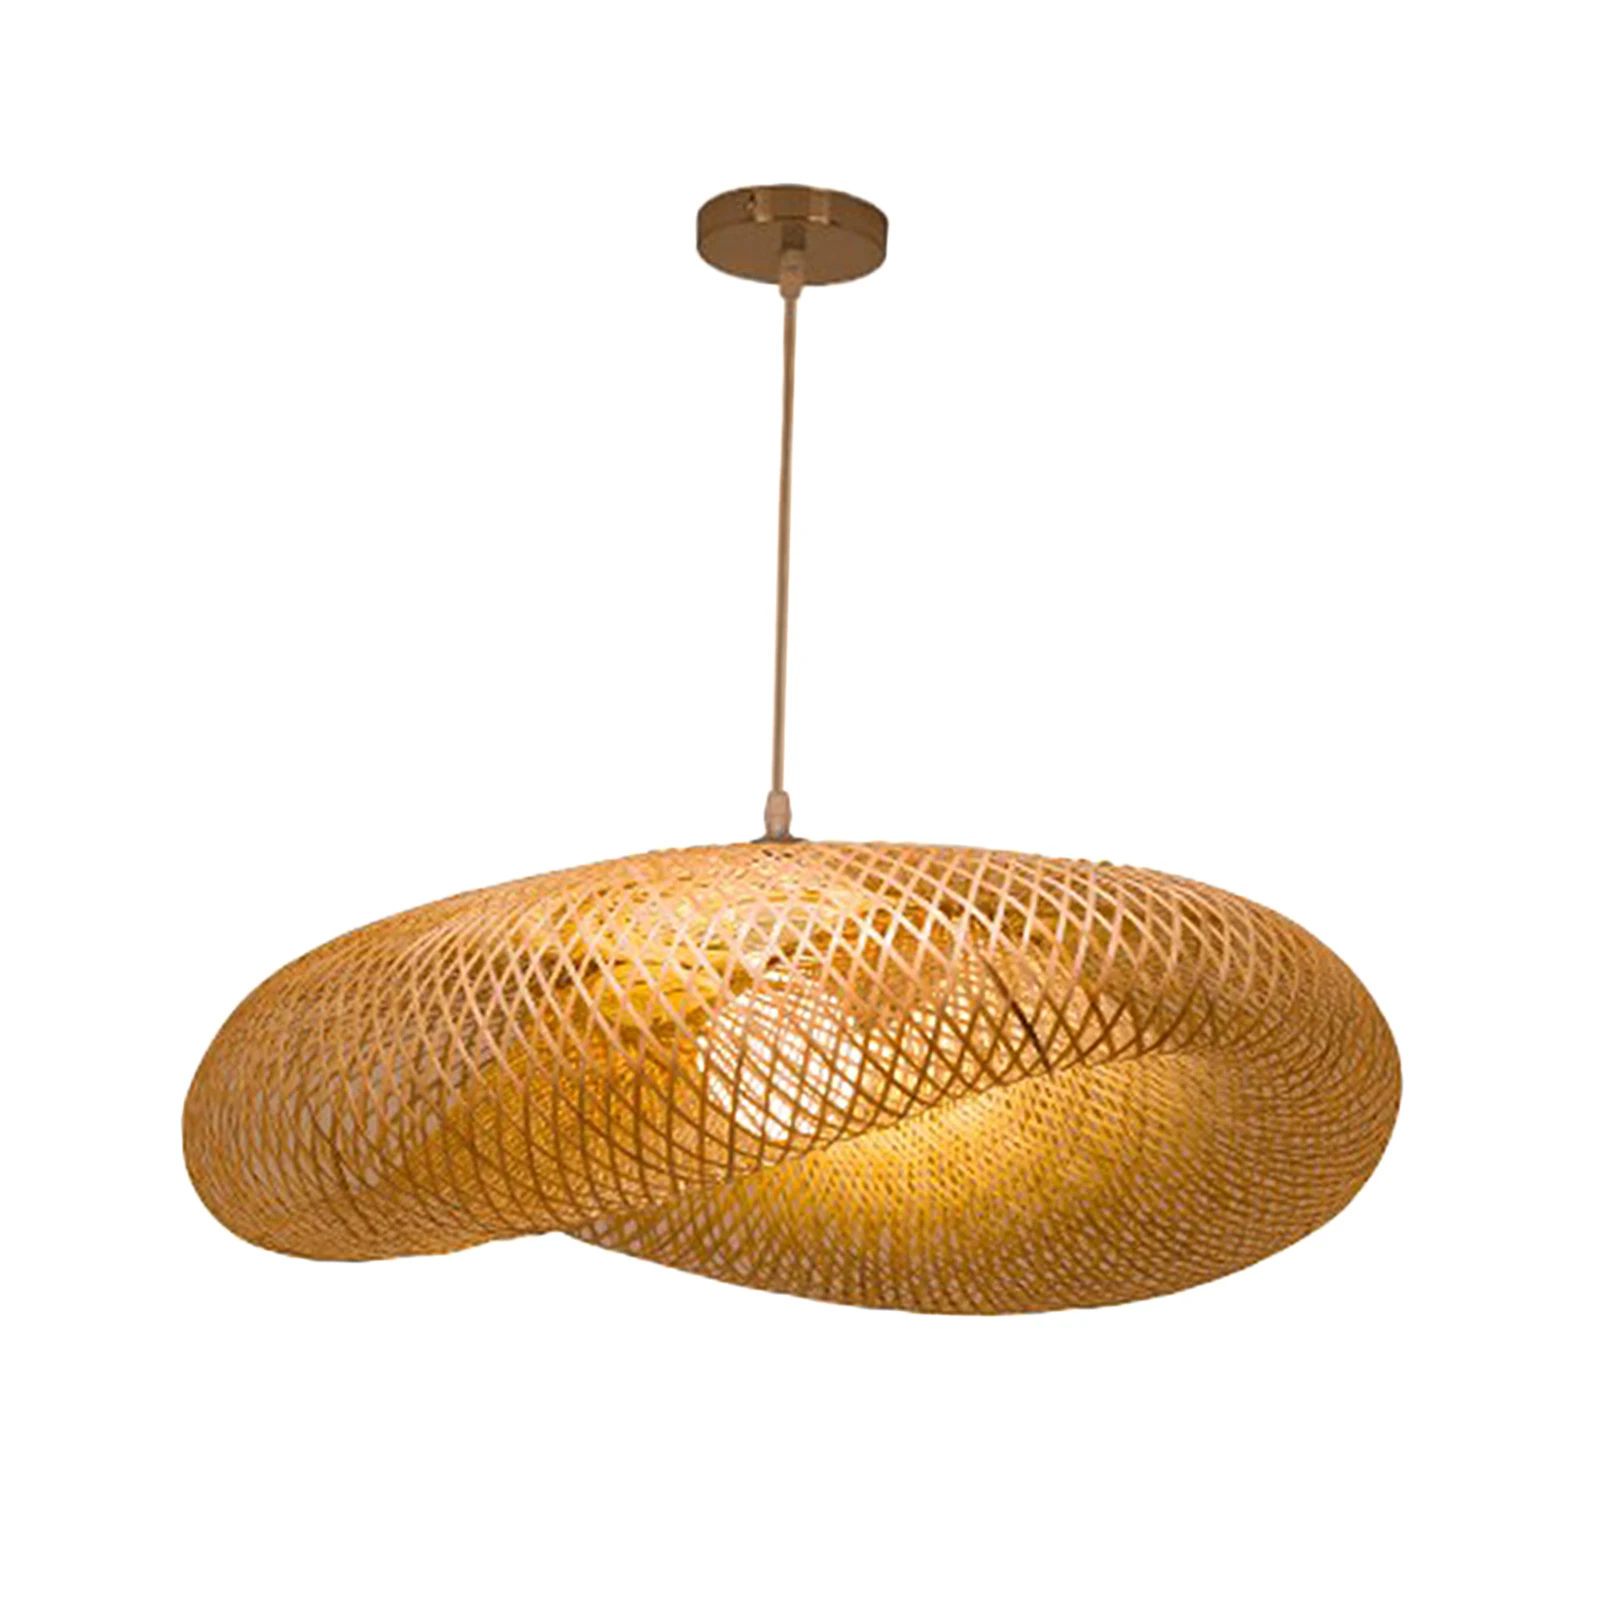 Retro Bamboo Weaving Chandelier Lamp Hanging LED Ceiling Lamp Droplight Fixtures for Restaurant Living Room Bedroom Decoration